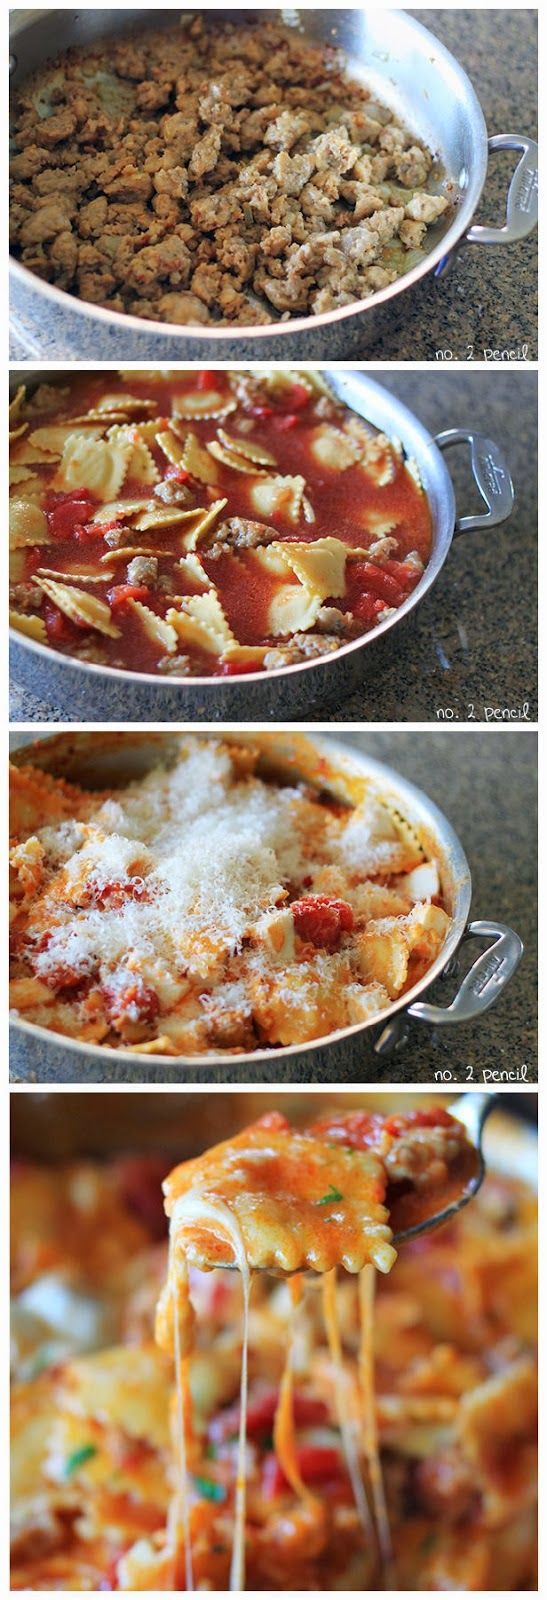 Skillet Lasagna | Food drink